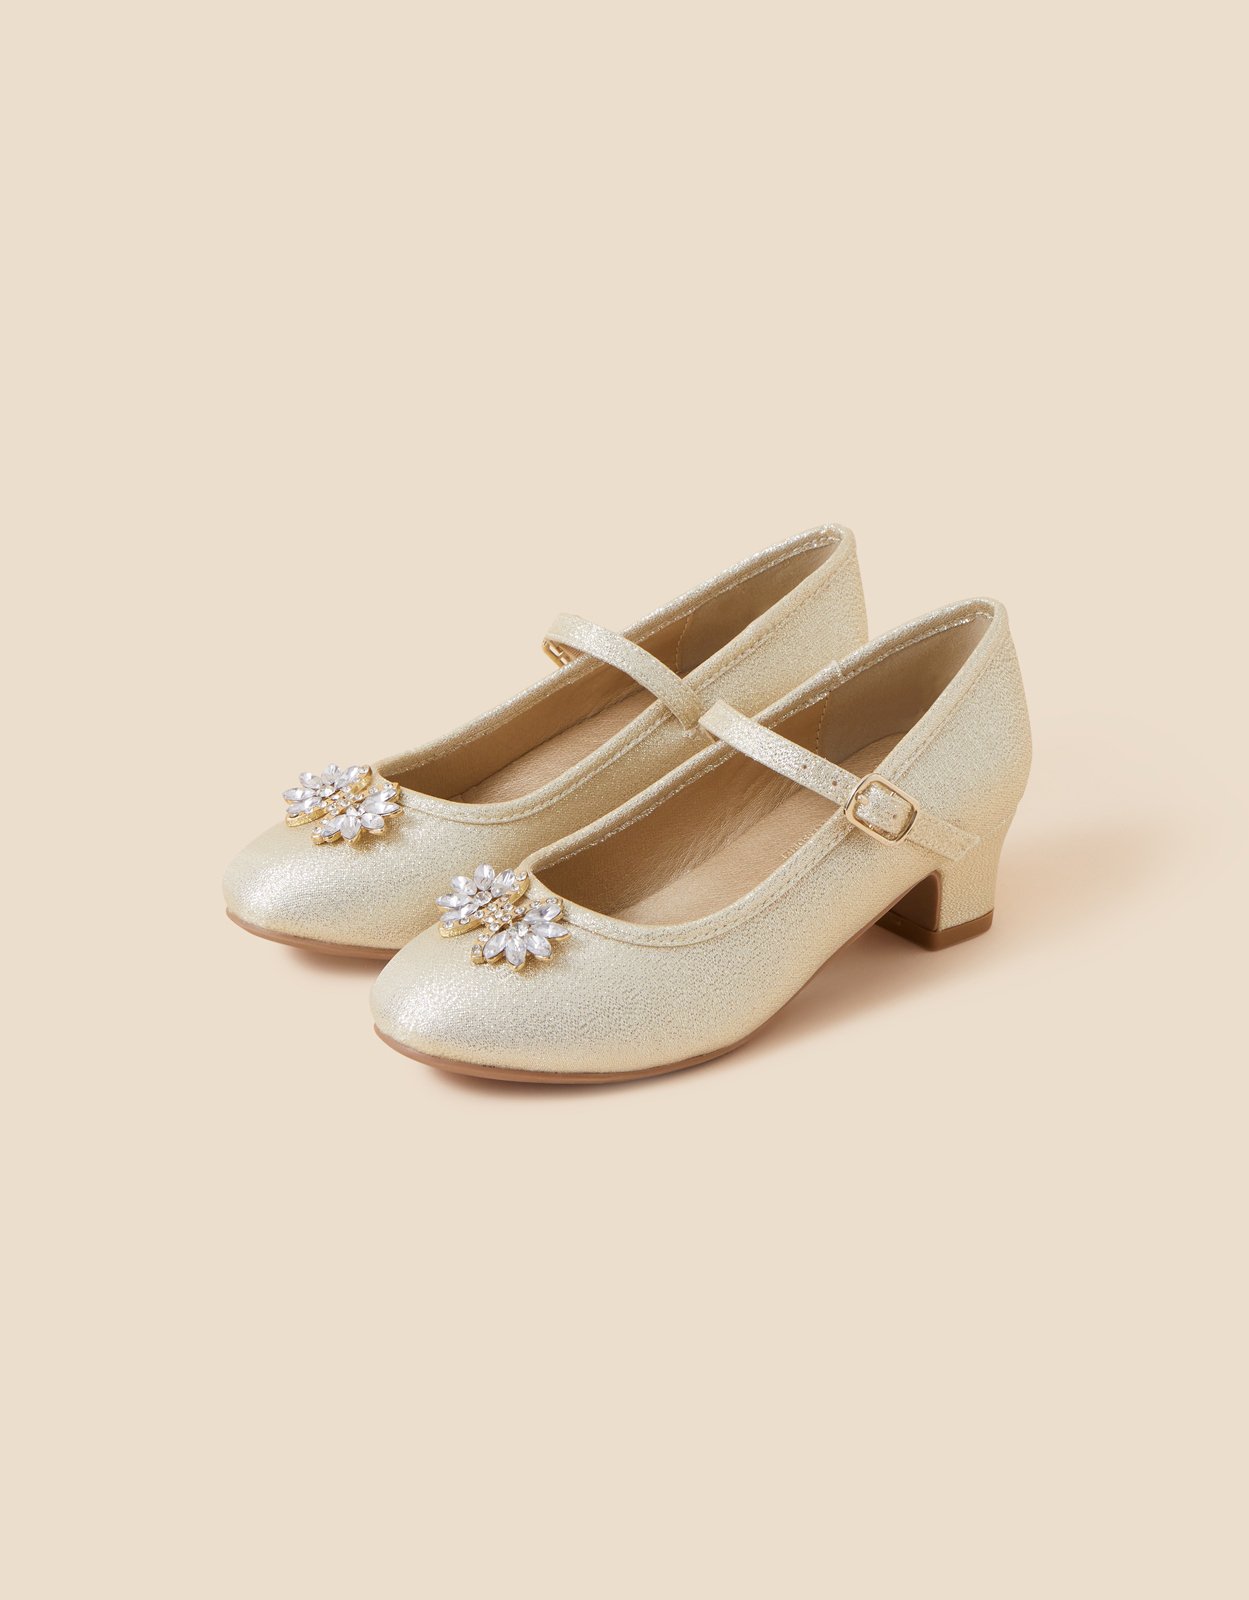 Accessorize Girl's Girls Shimmer Gem Flamenco Shoes Gold, Size: 7